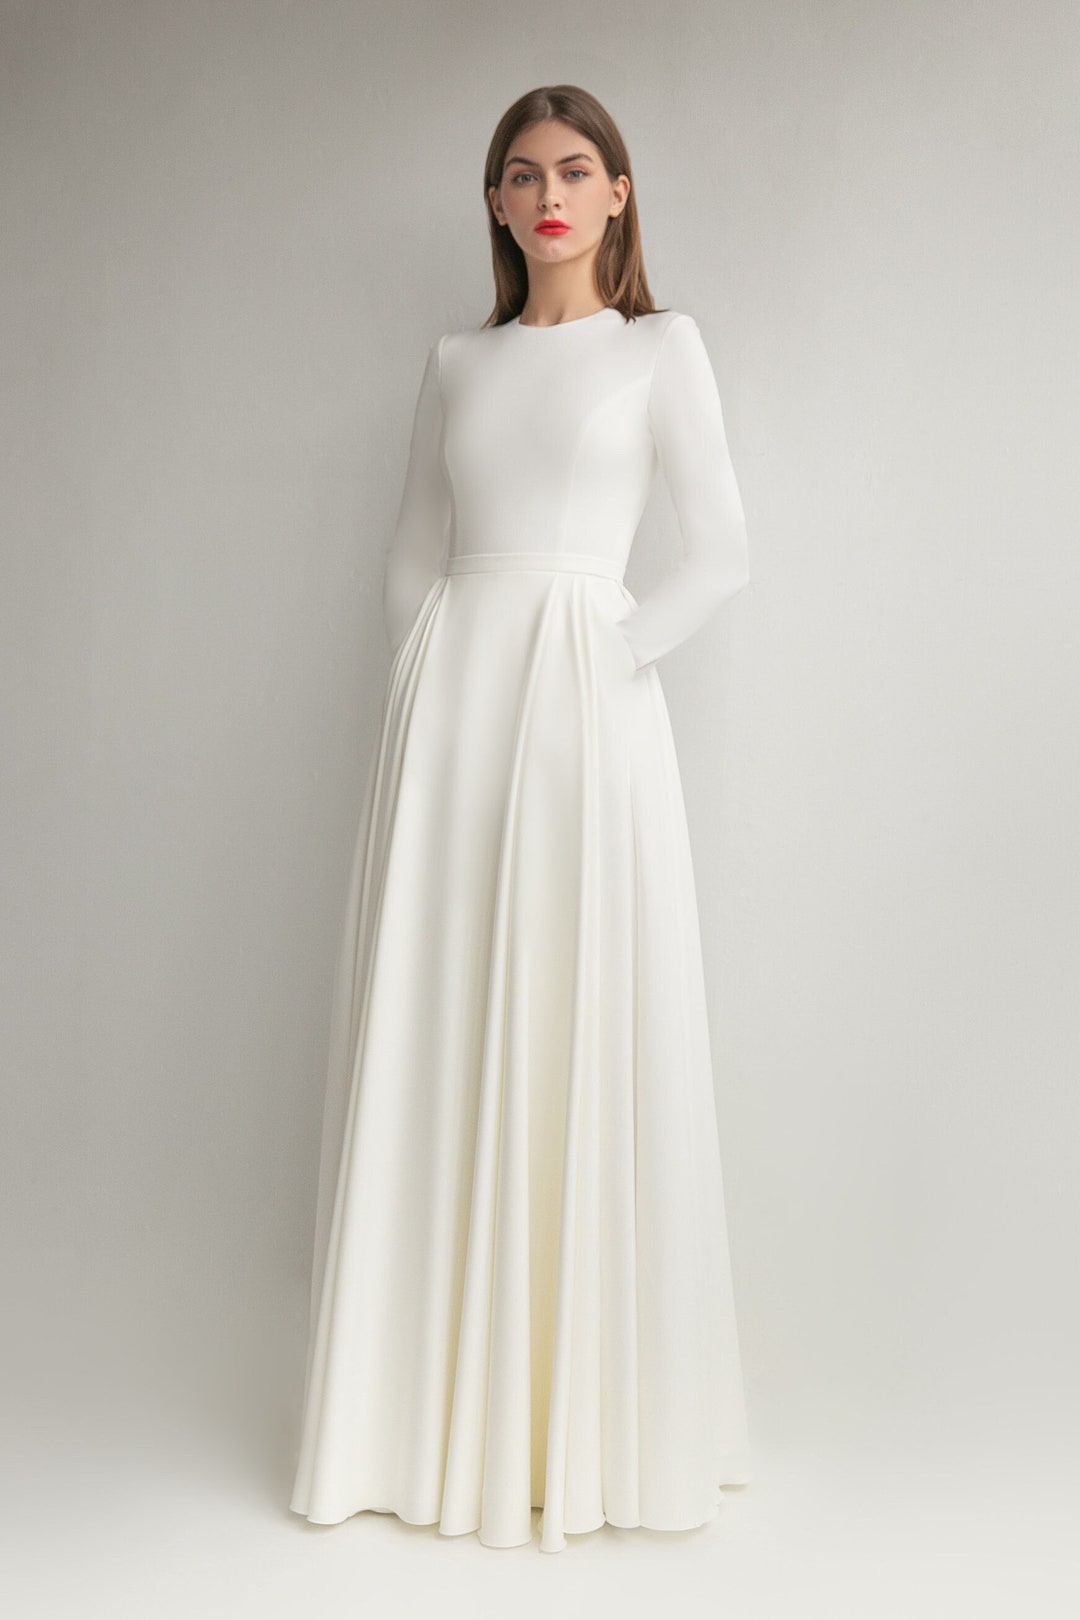 Modest Wedding Dress DEBORA. Crepe Wedding Dress Long Sleeve Dress White  Wedding Dress Winter Wedding Dress -  UK